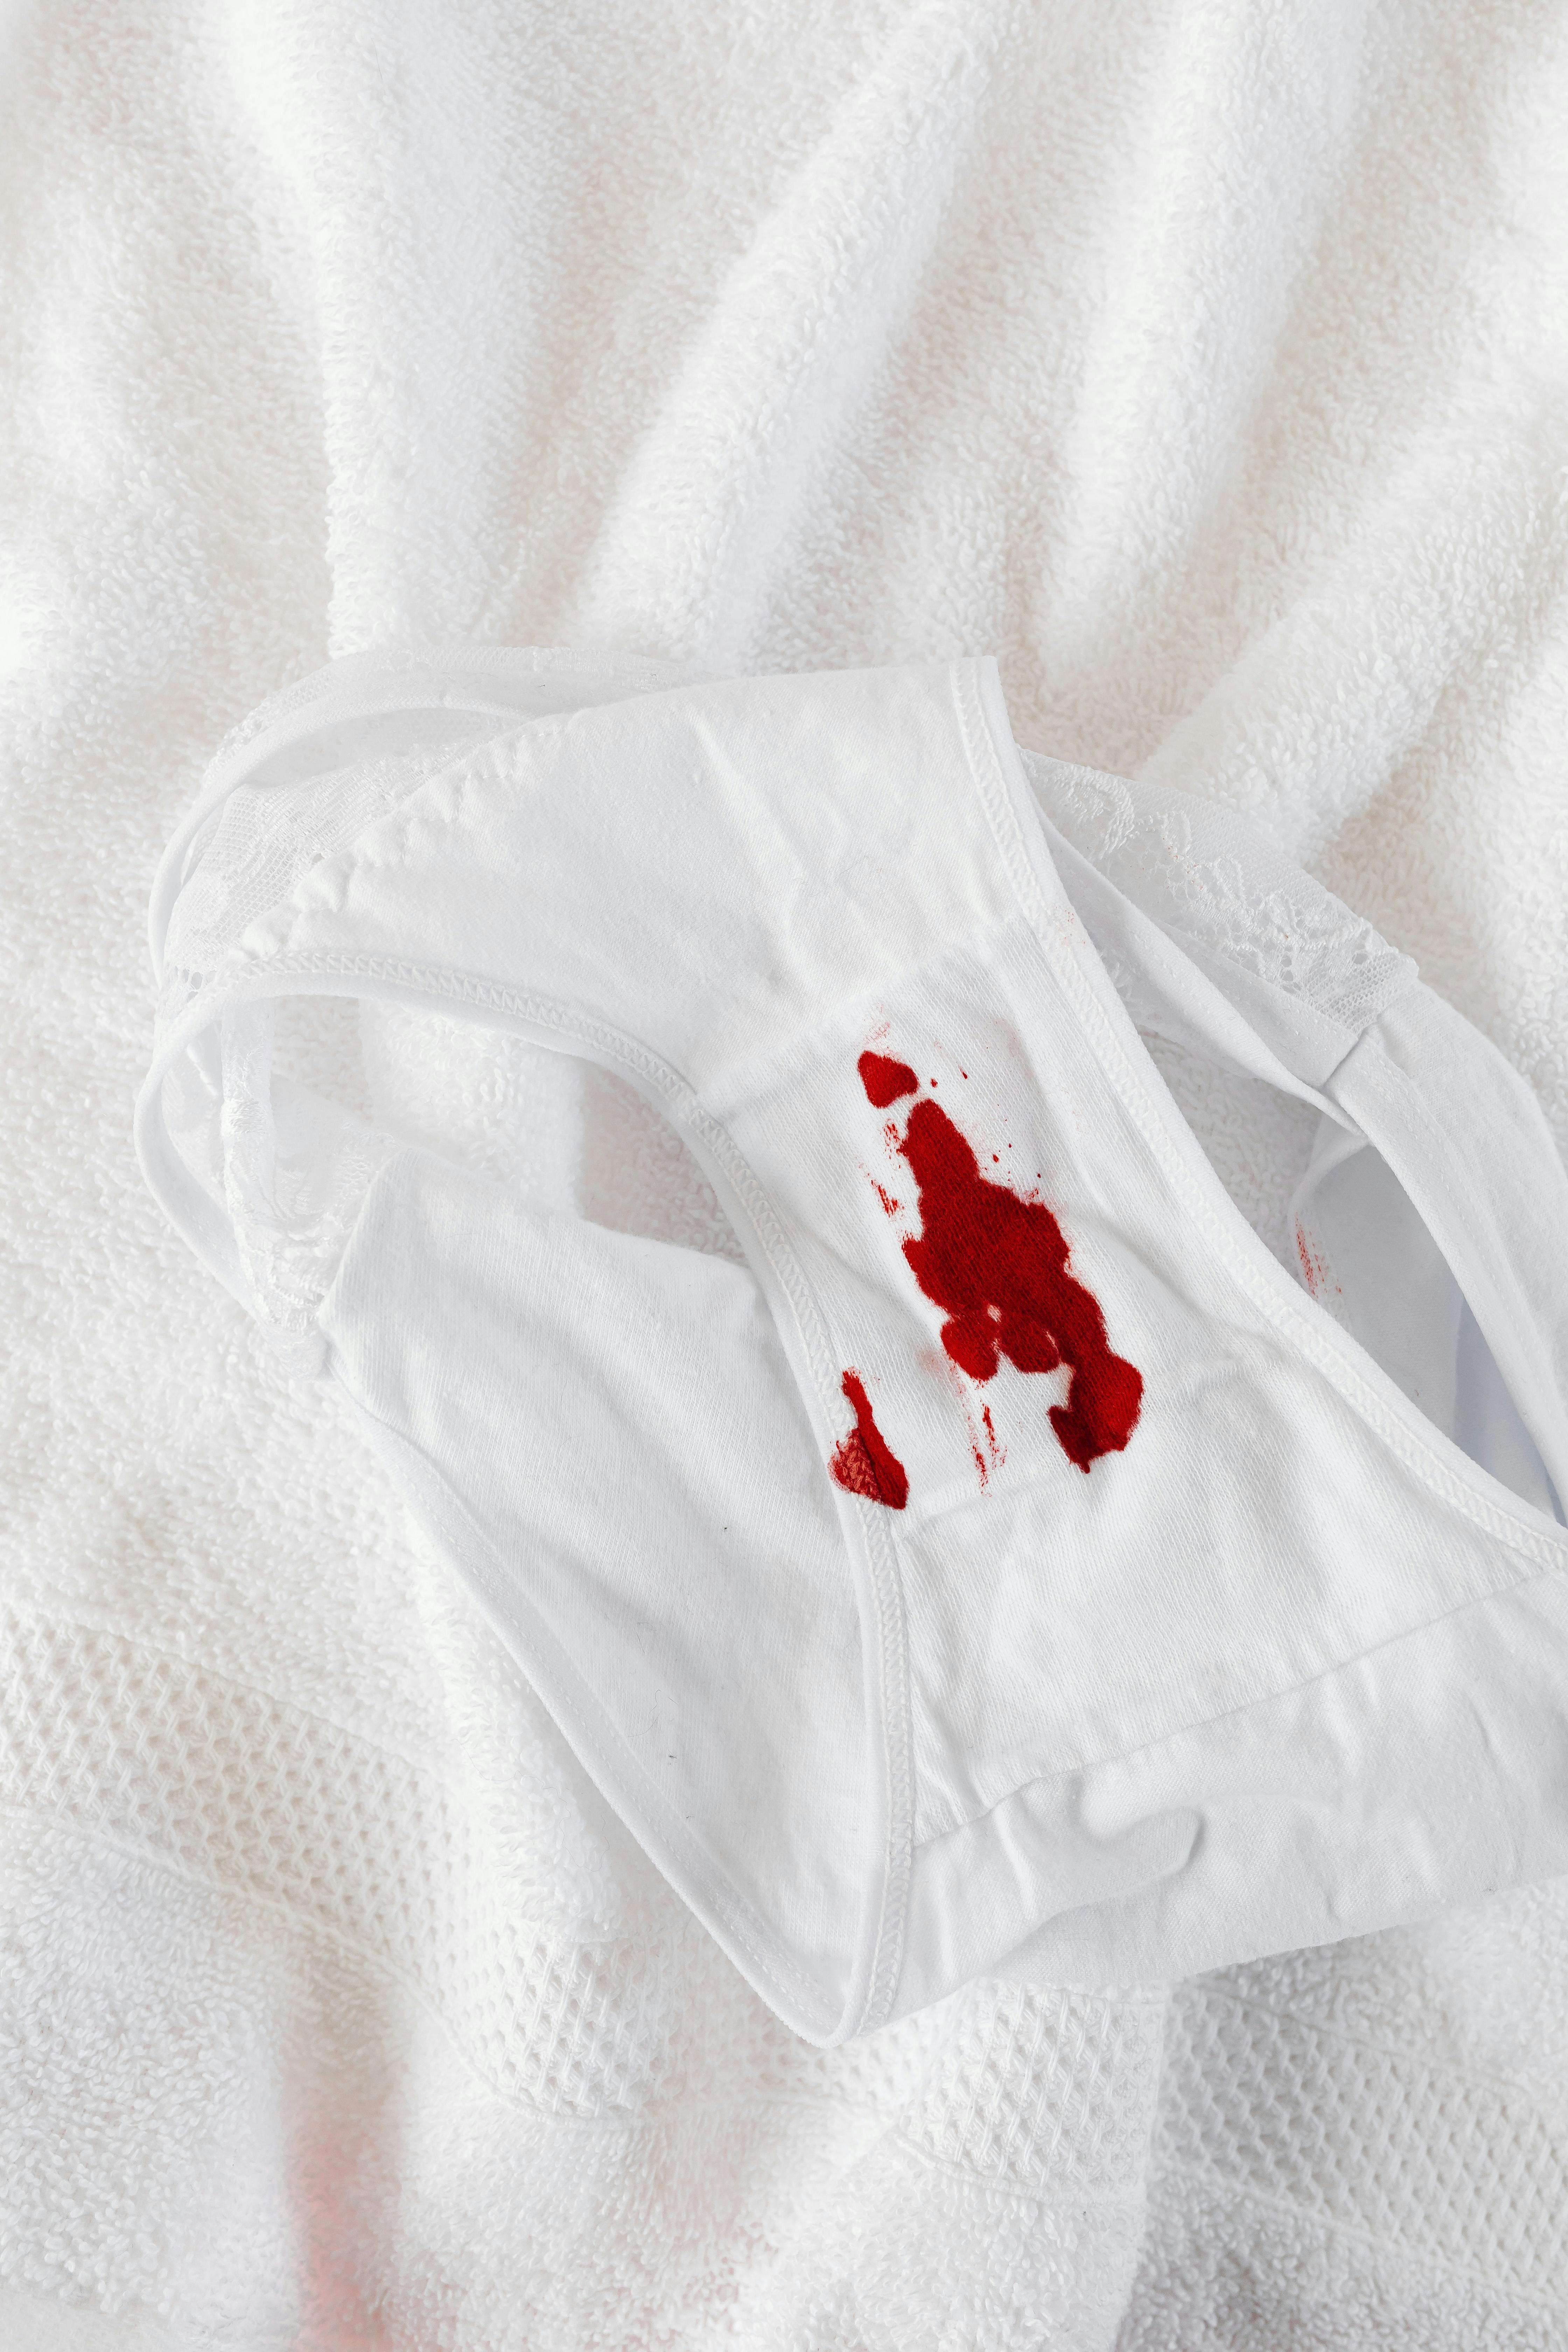 Blood on an Underwear · Free Stock Photo